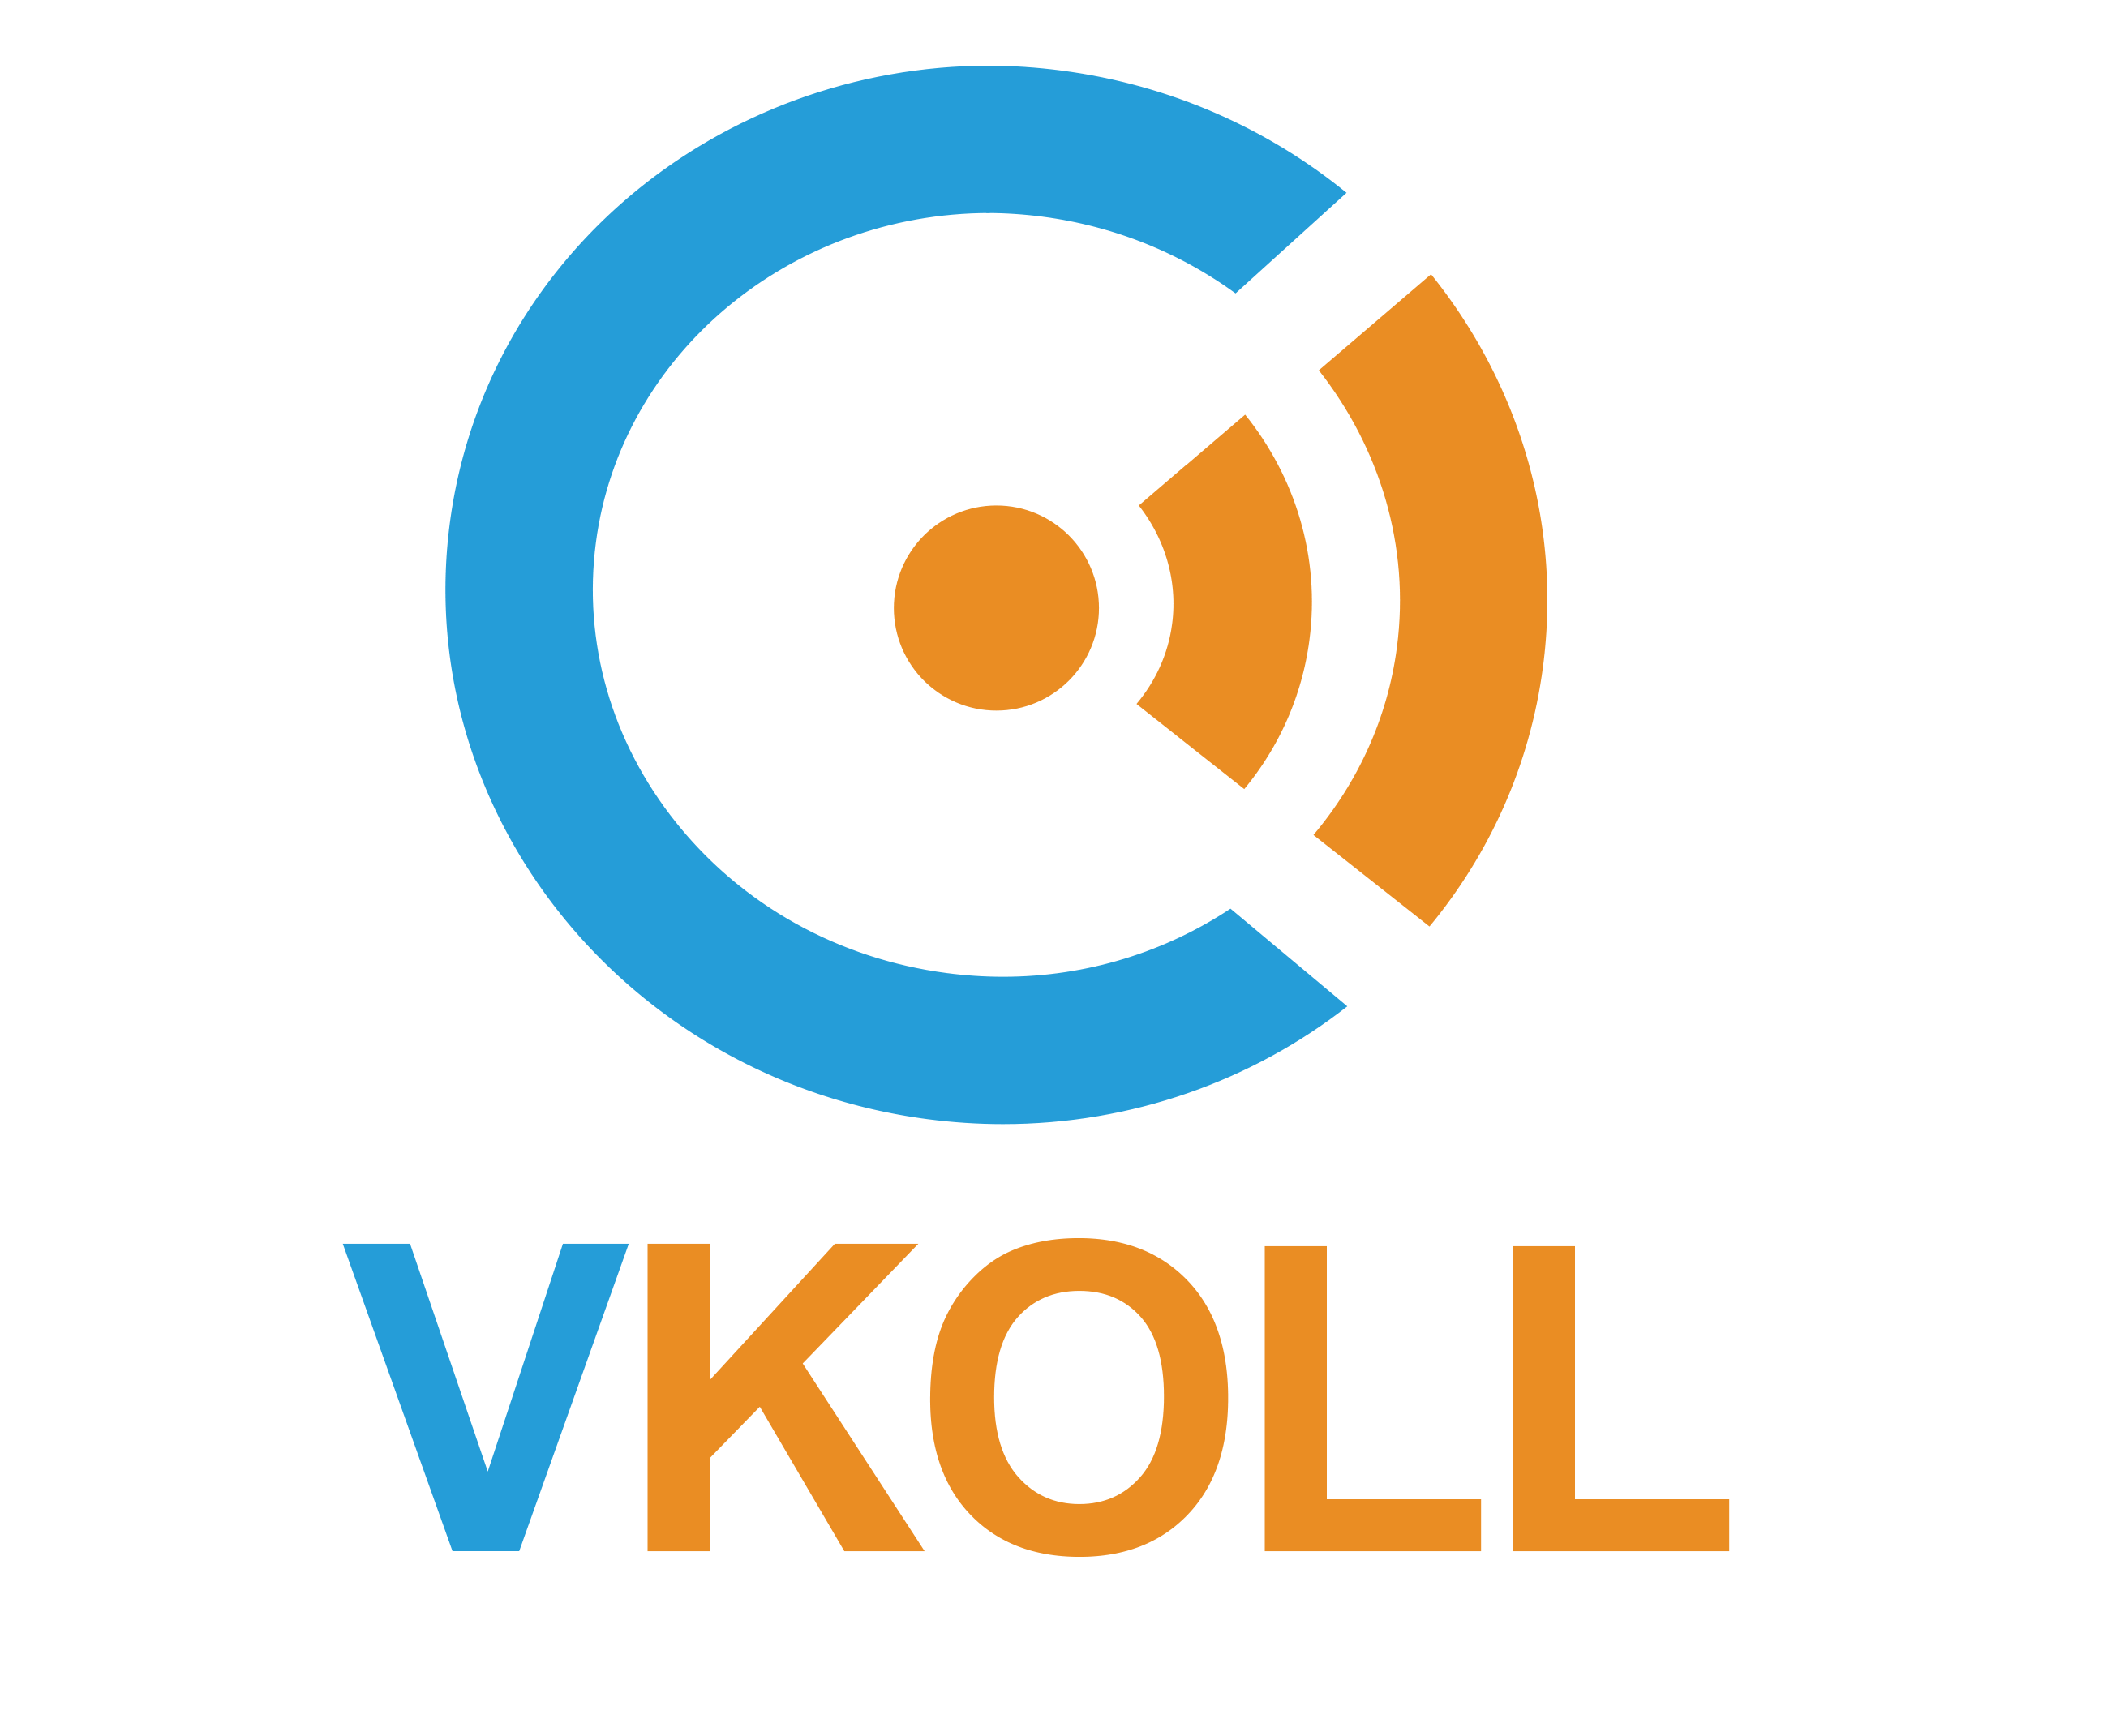 VKOLL logo.png